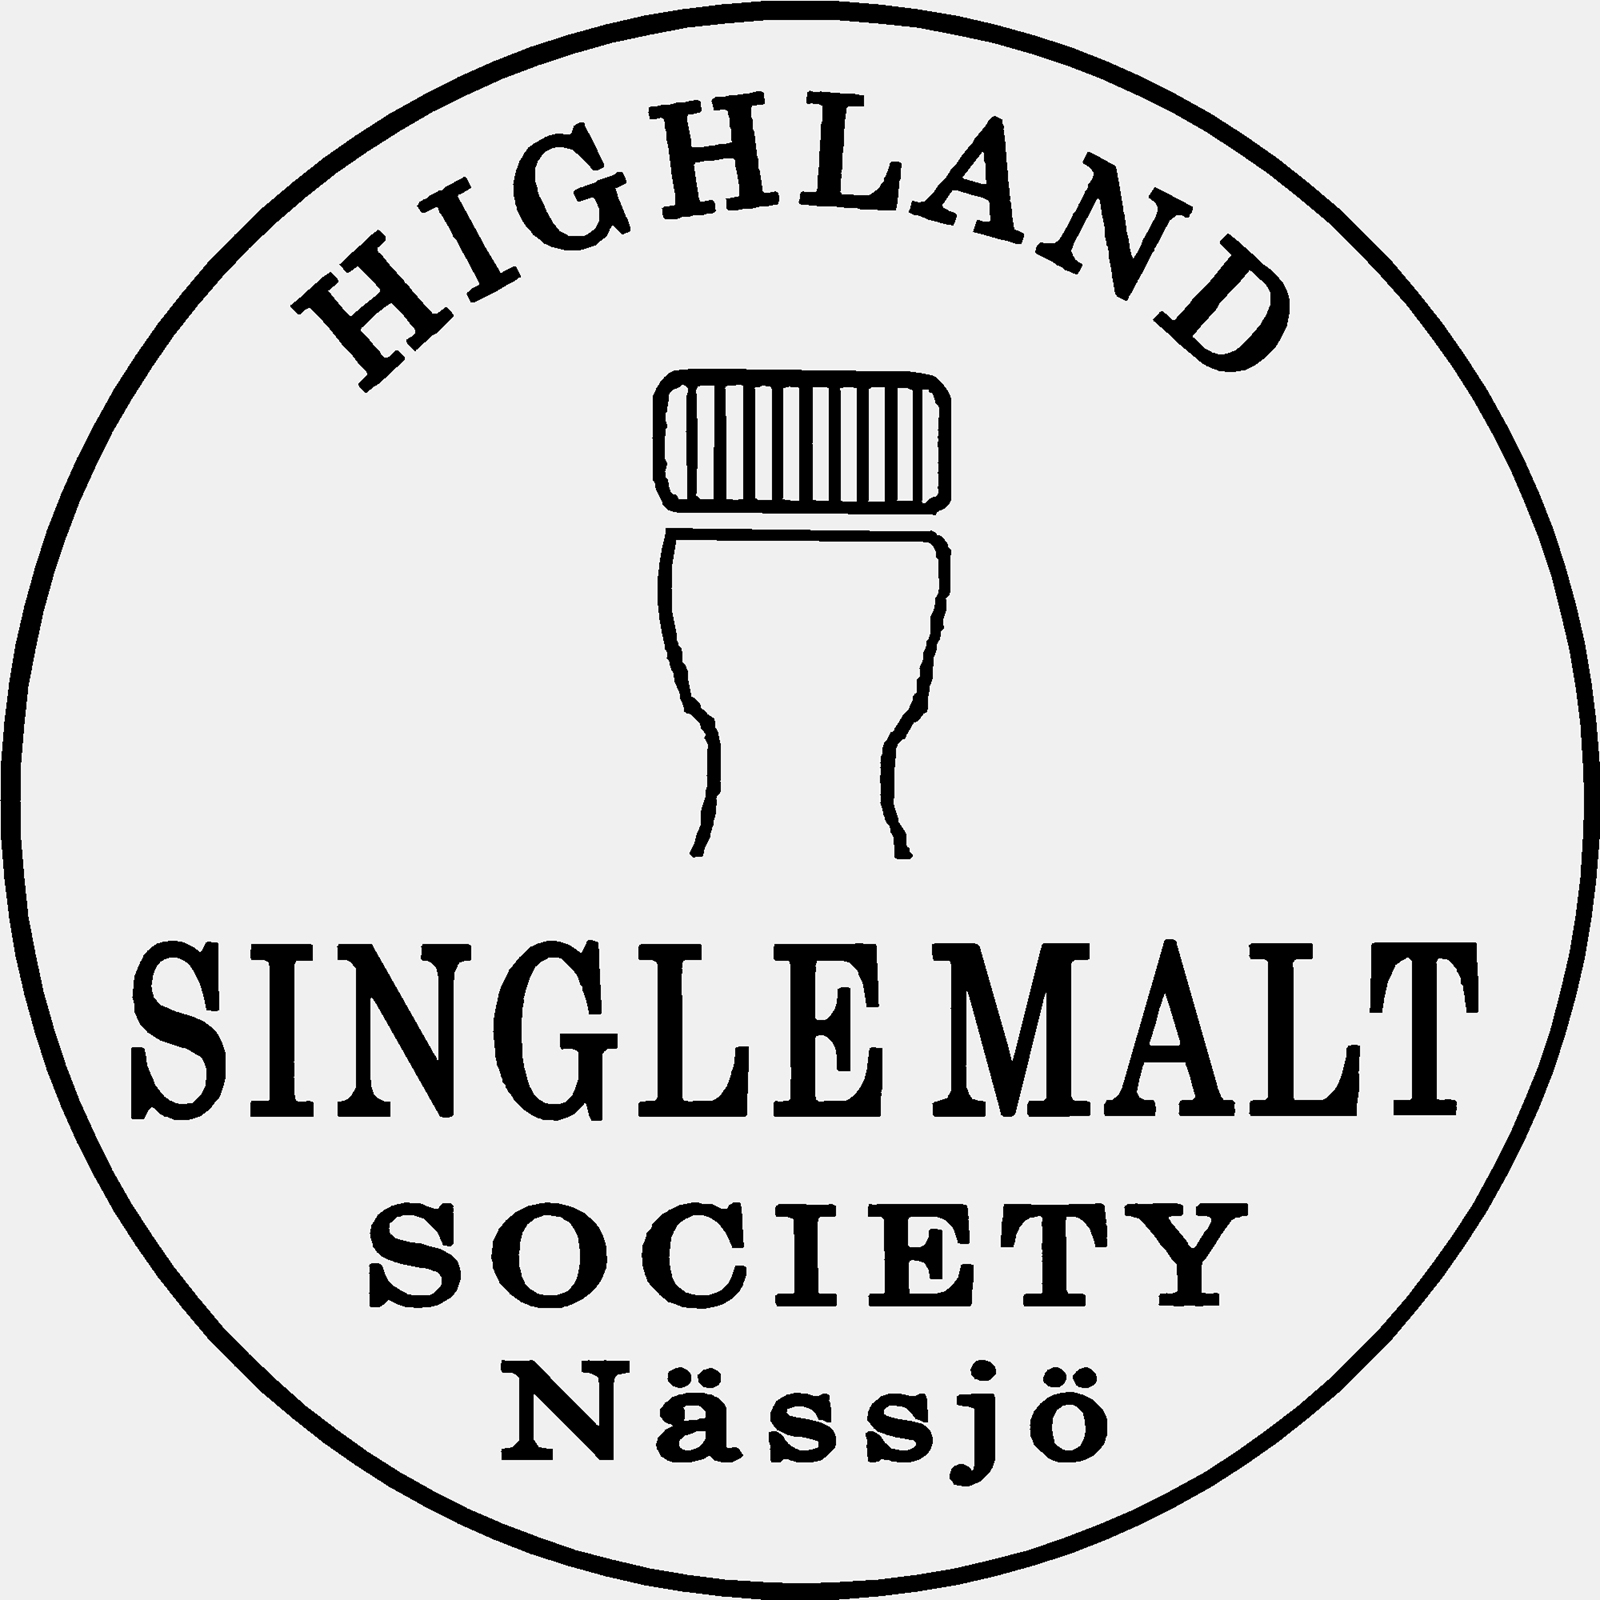 Highland Single Malt Society